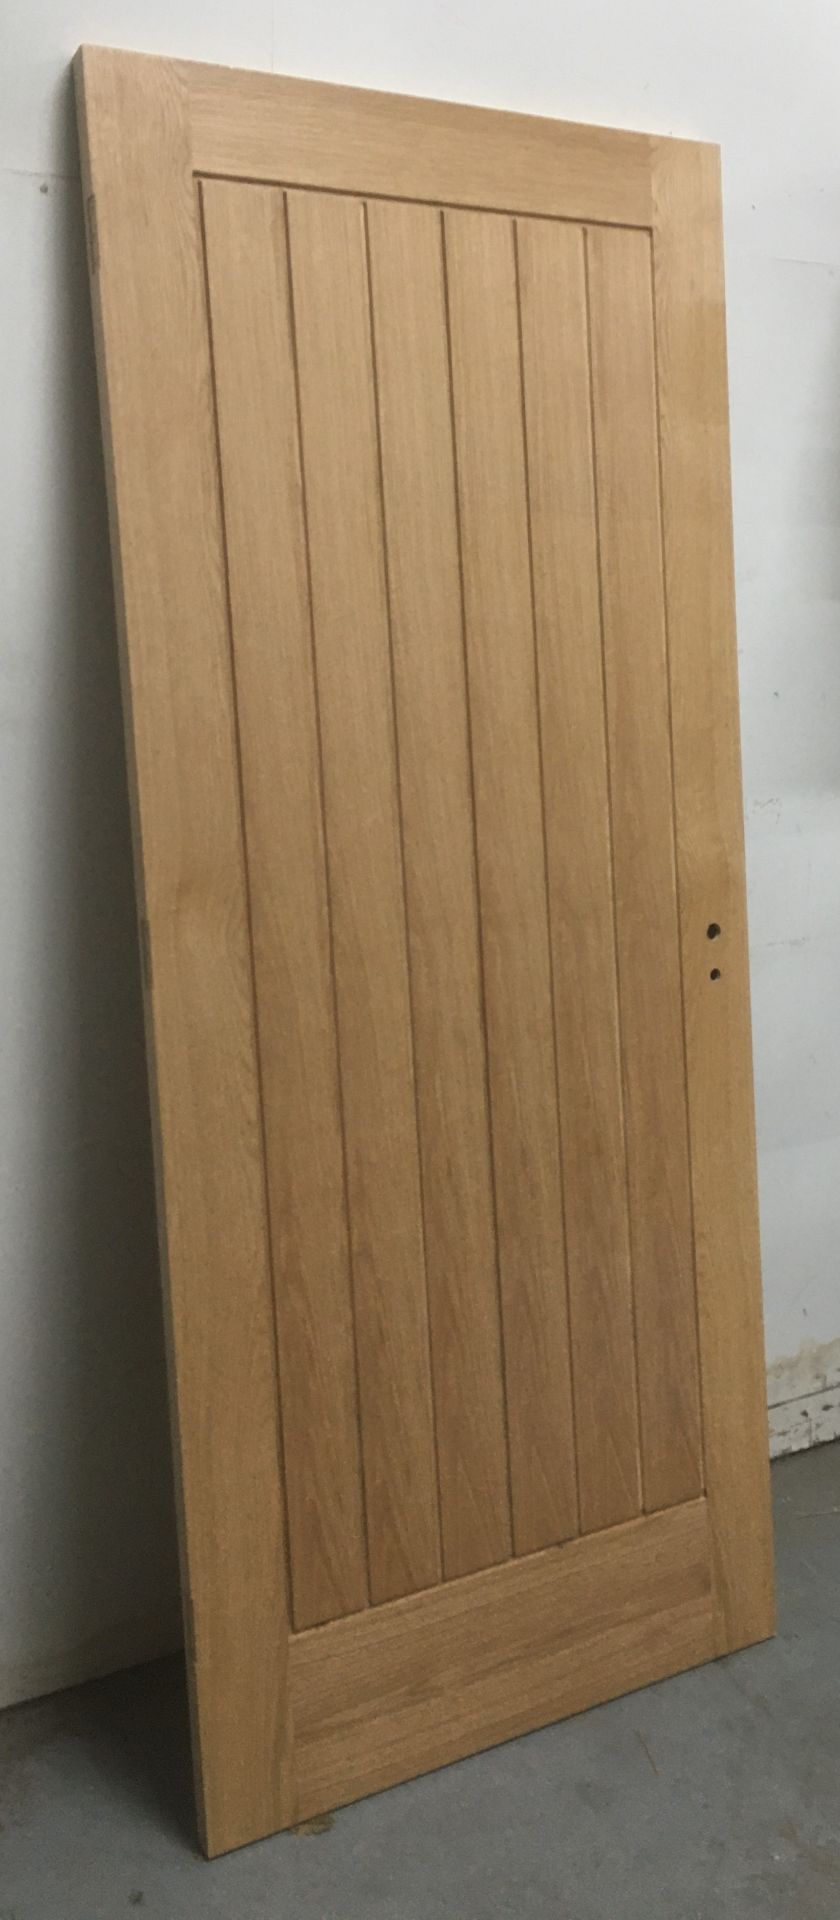 Unbranded Grid Pattern Door W/ Pre-Cut Hinges & Handle Profiles | 1970mm x 833mm x 35mm - Image 2 of 5